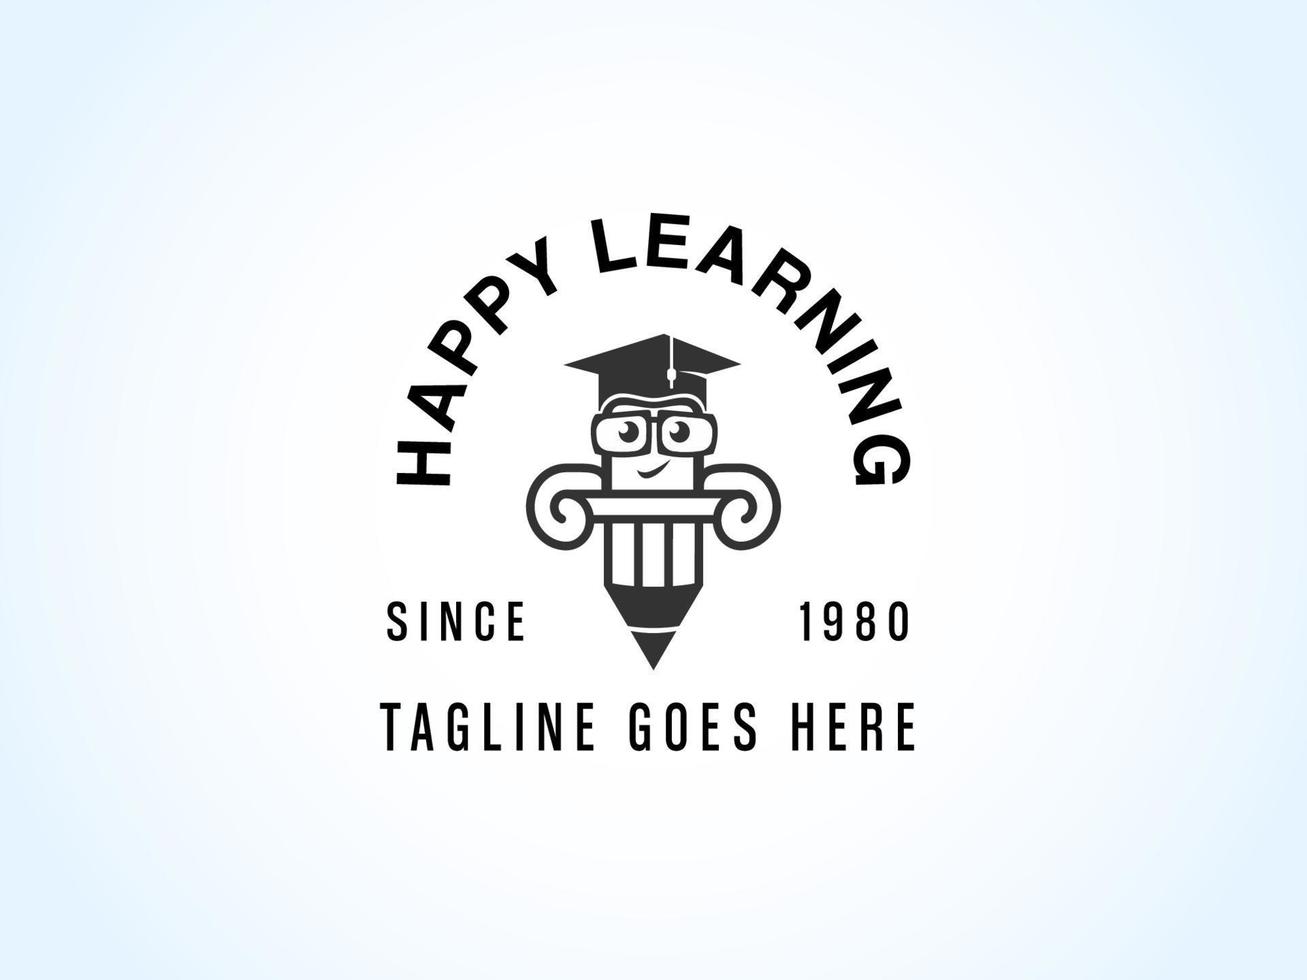 onderwijs logo ontwerp, tekenfilm potlood met bril en diploma uitreiking hoed staand in boek vector